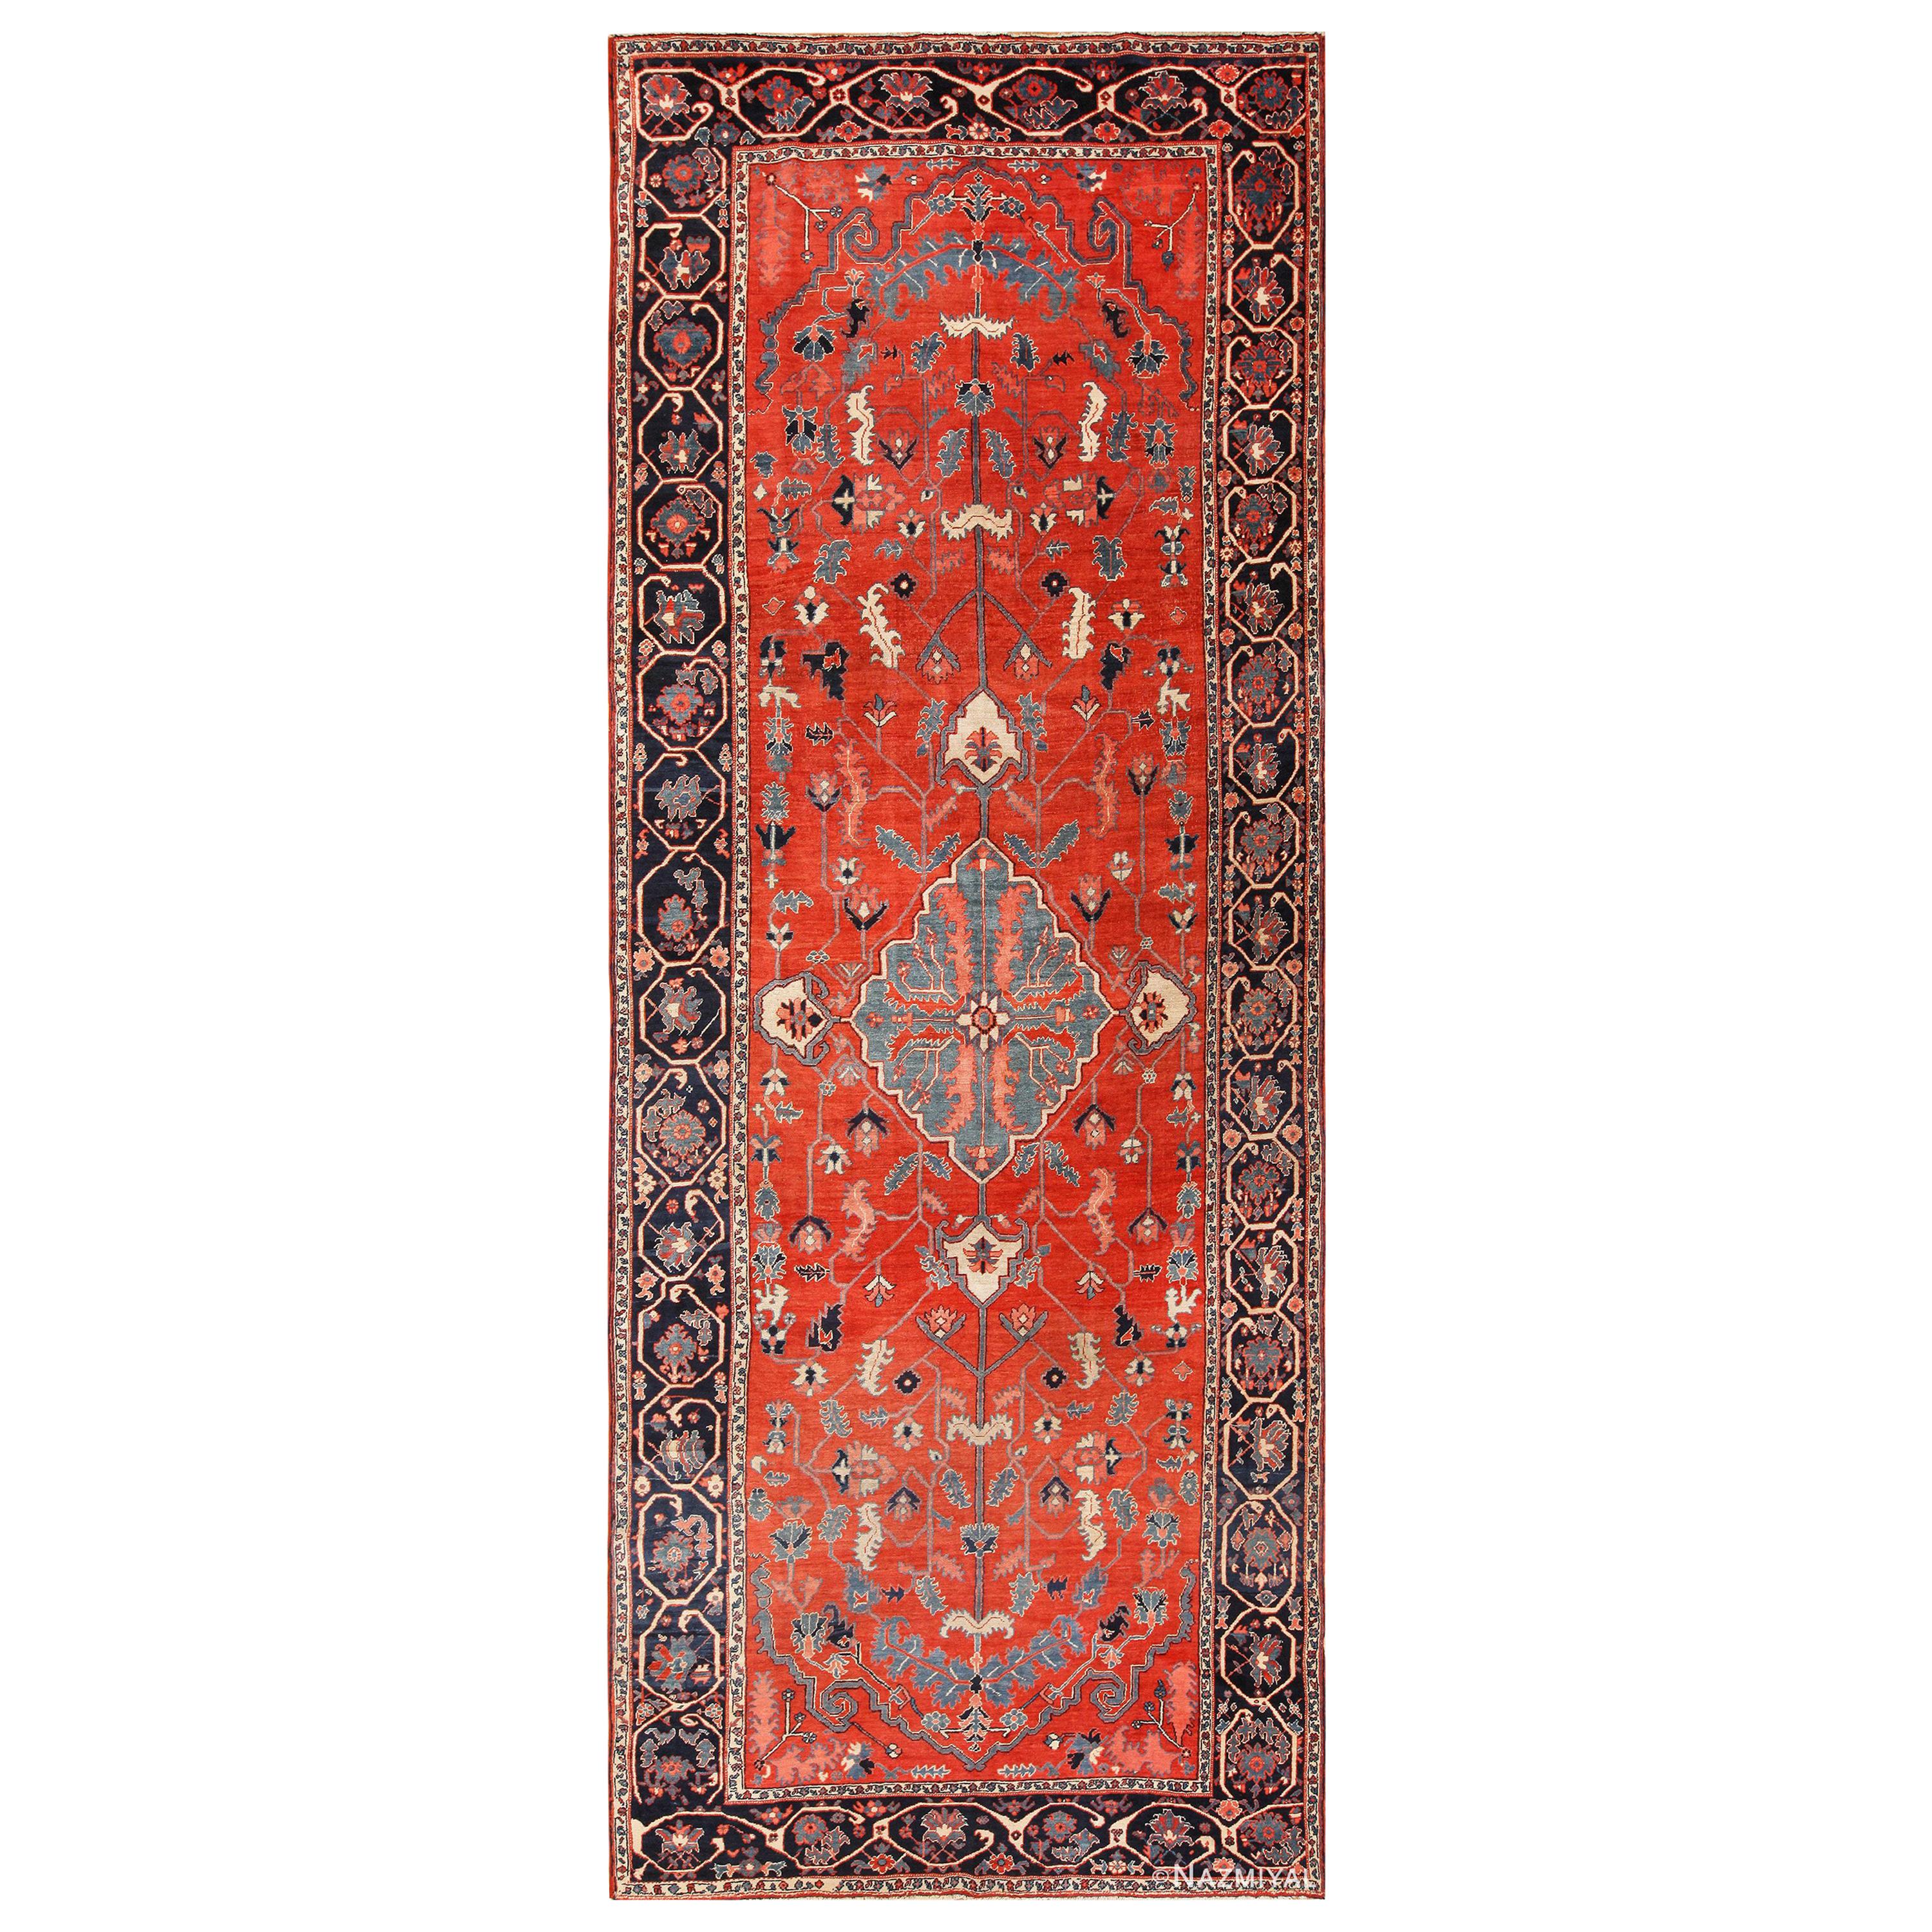 Rare Long and Narrow Antique Persian Heriz Rug. Size: 7 ft x 18 ft